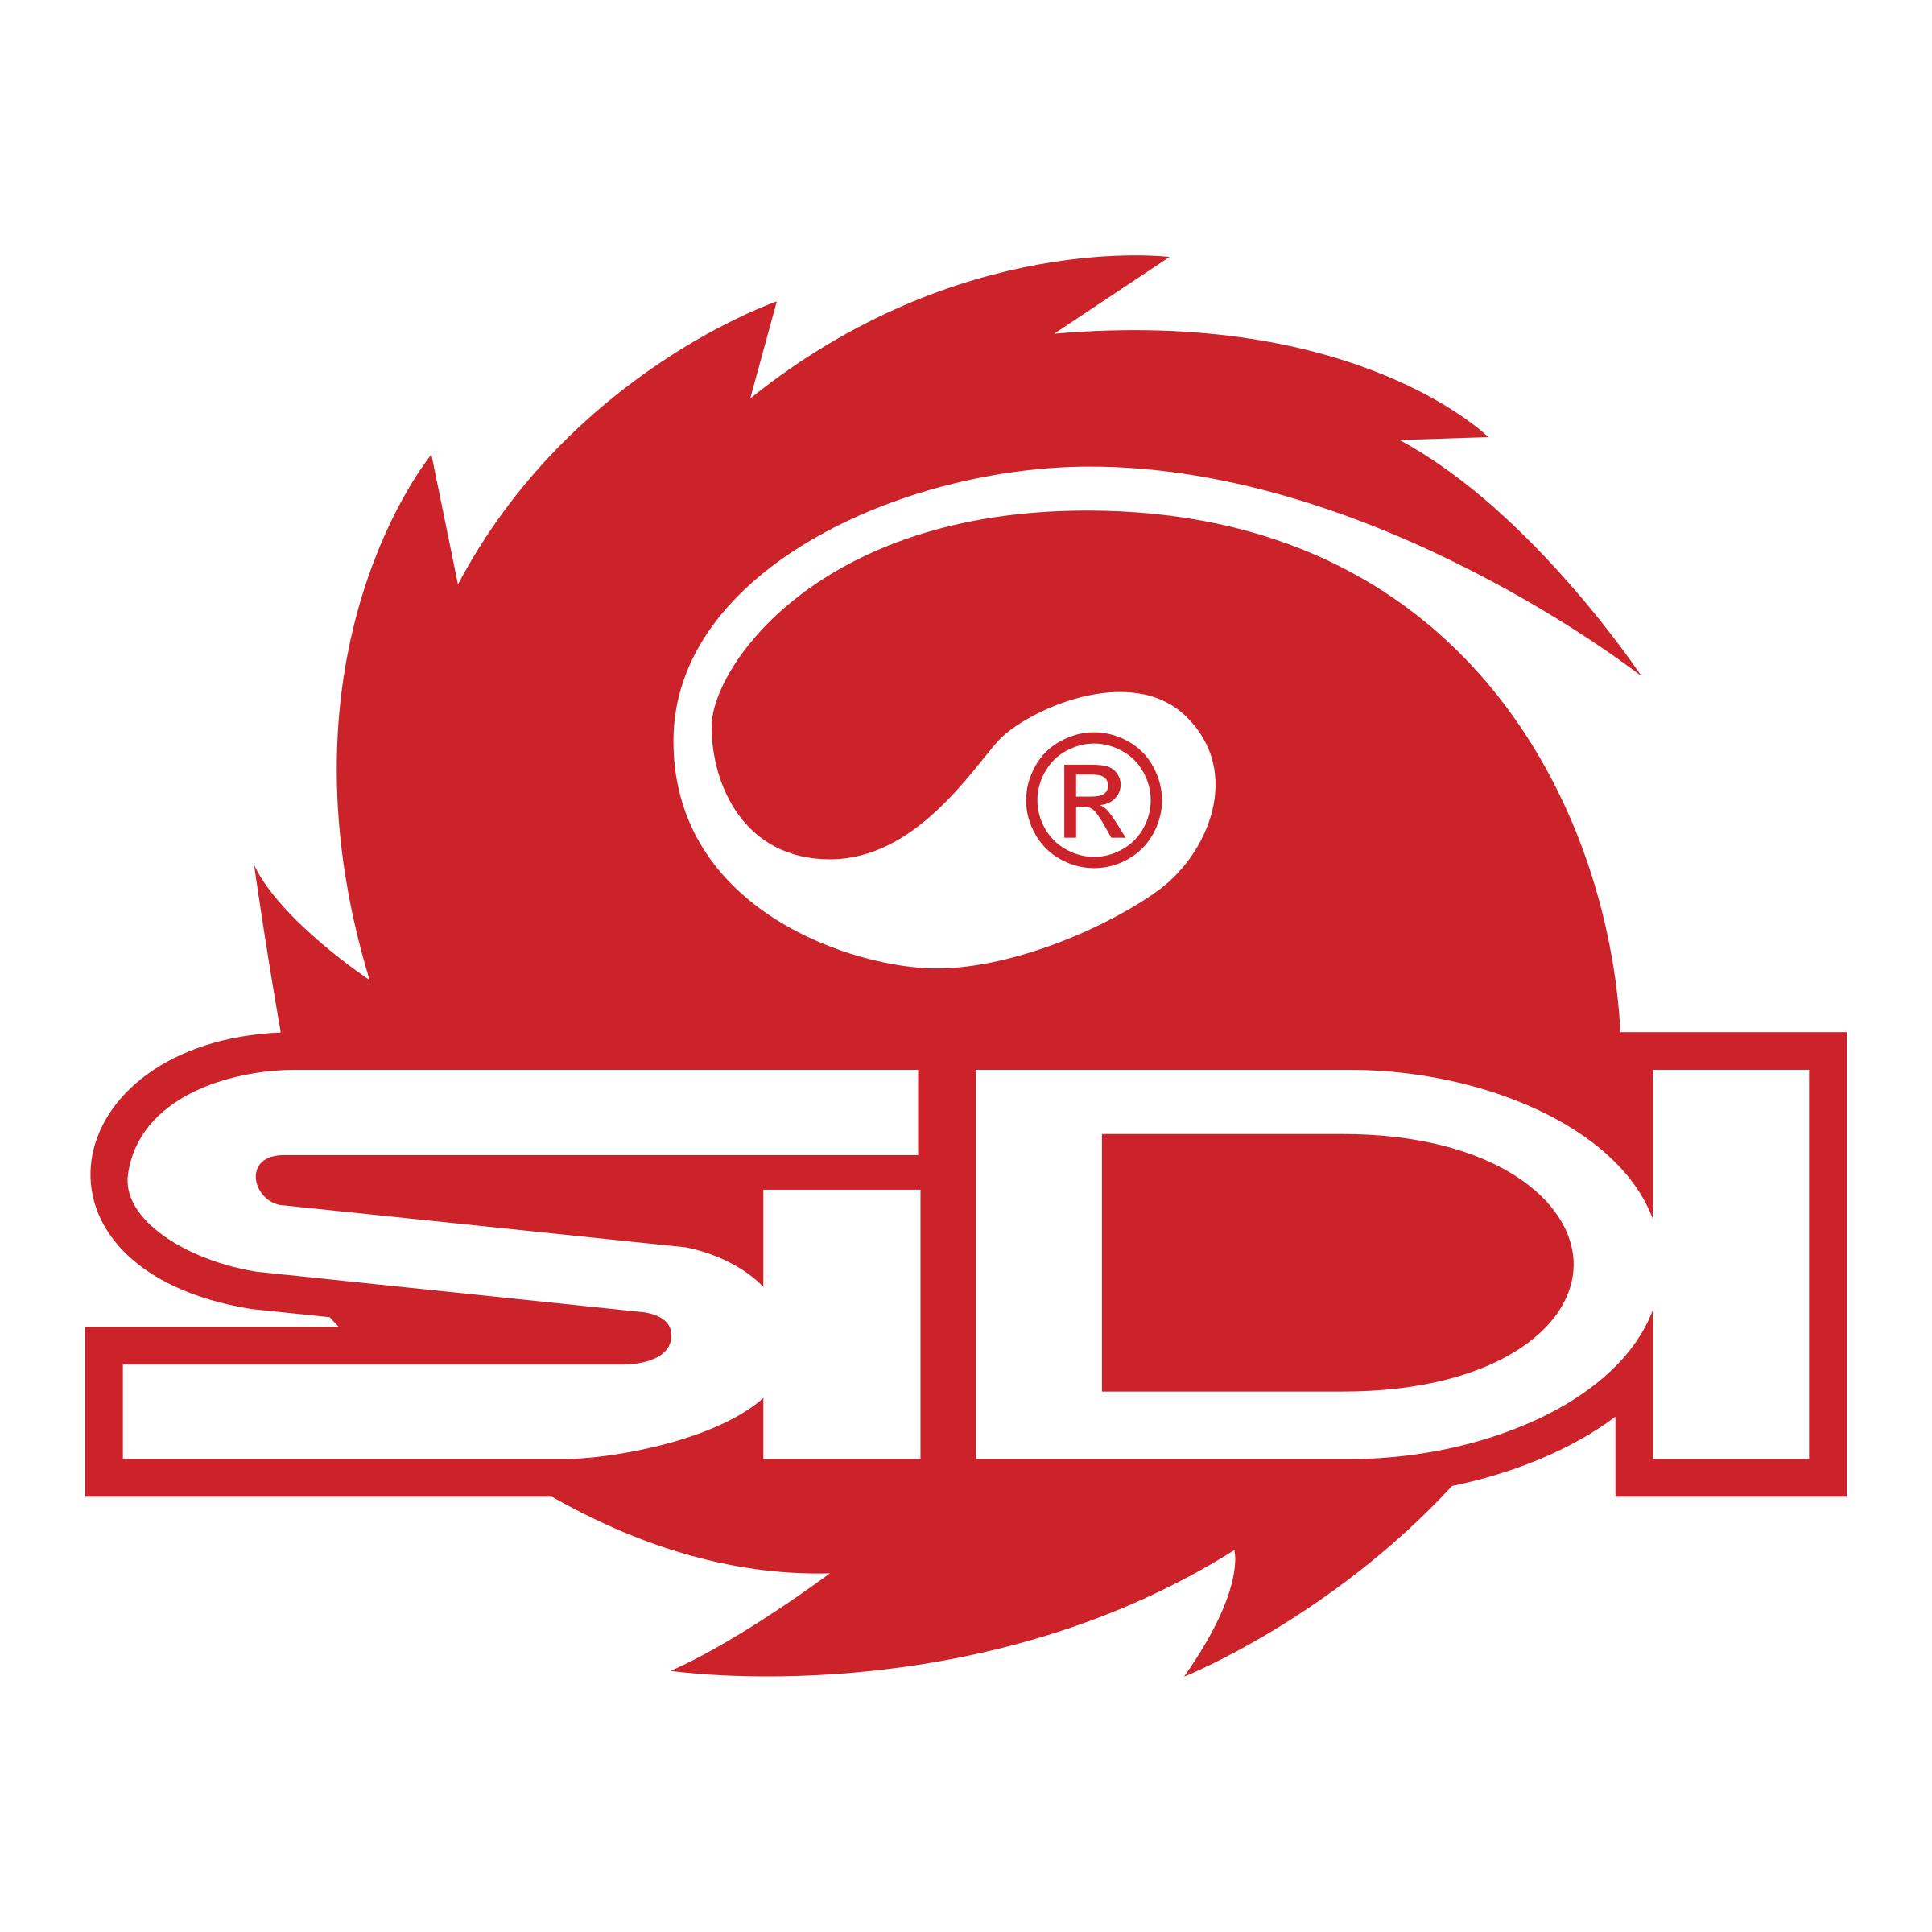 Sidi Logo - Sidi Logo PNG Transparent & SVG Vector - Freebie Supply